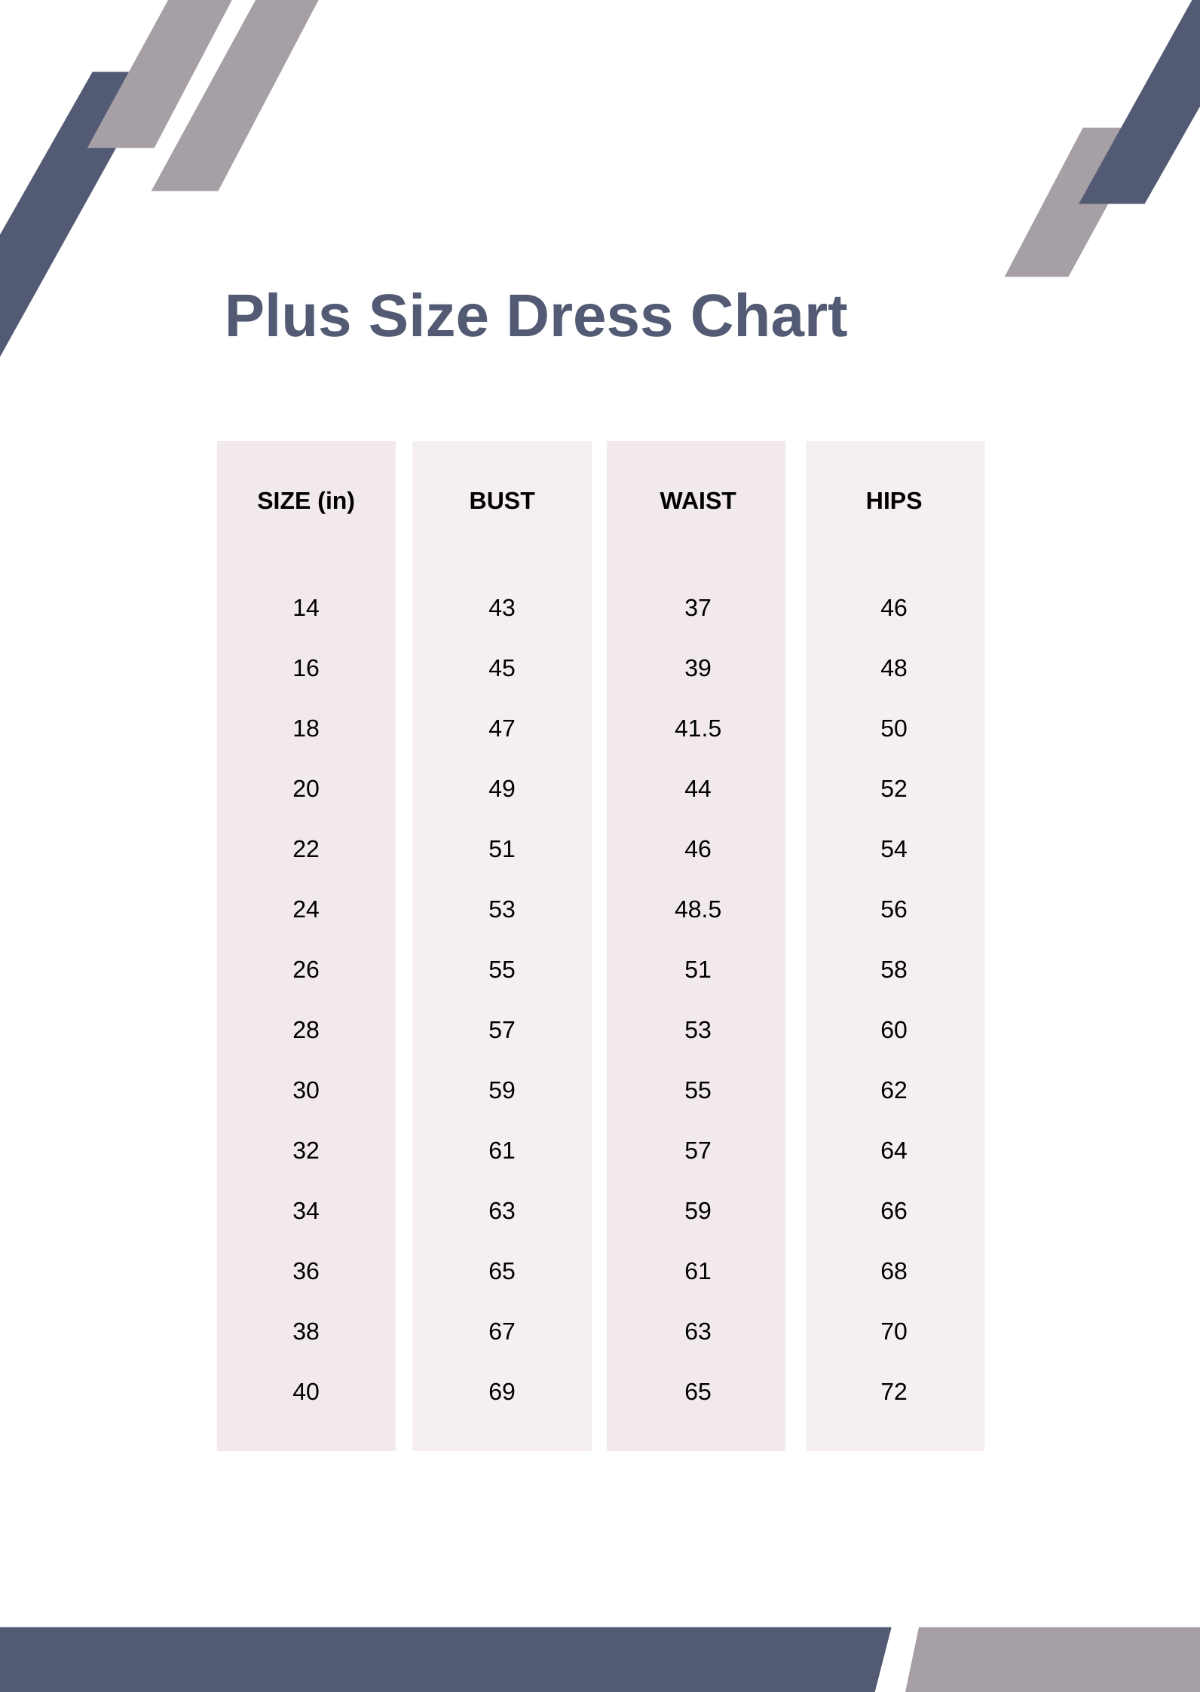 Plus Size Dress Size Chart Template